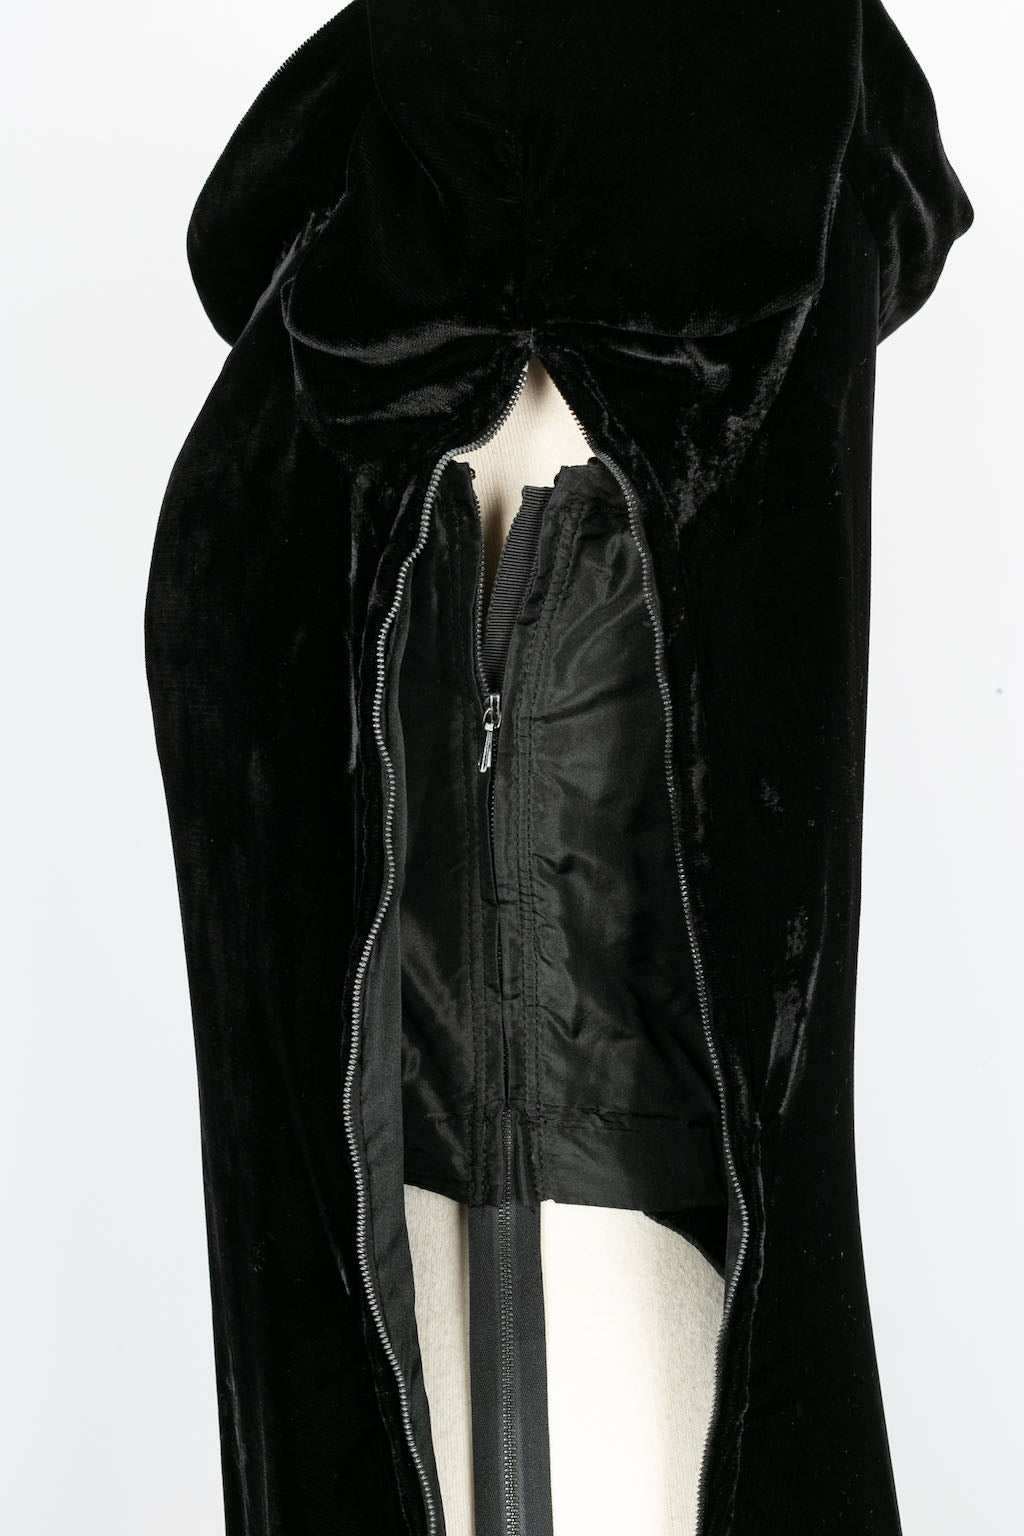 Robe Yves Saint Laurent Haute Couture 1990